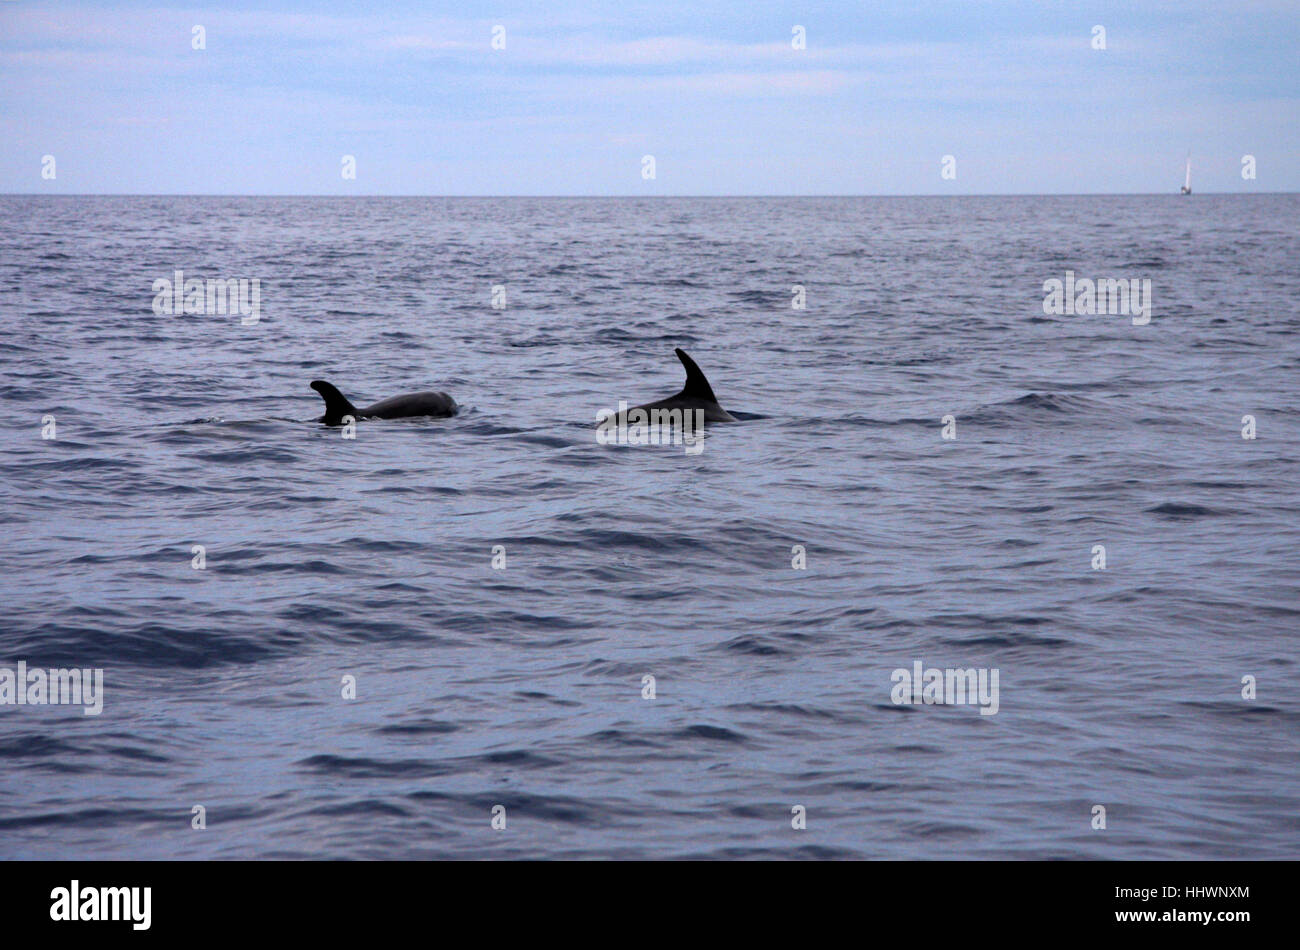 Impressionen: Delfine, Scandola, Korsika/ Corsica, Frankreich/ France. Stock Photo